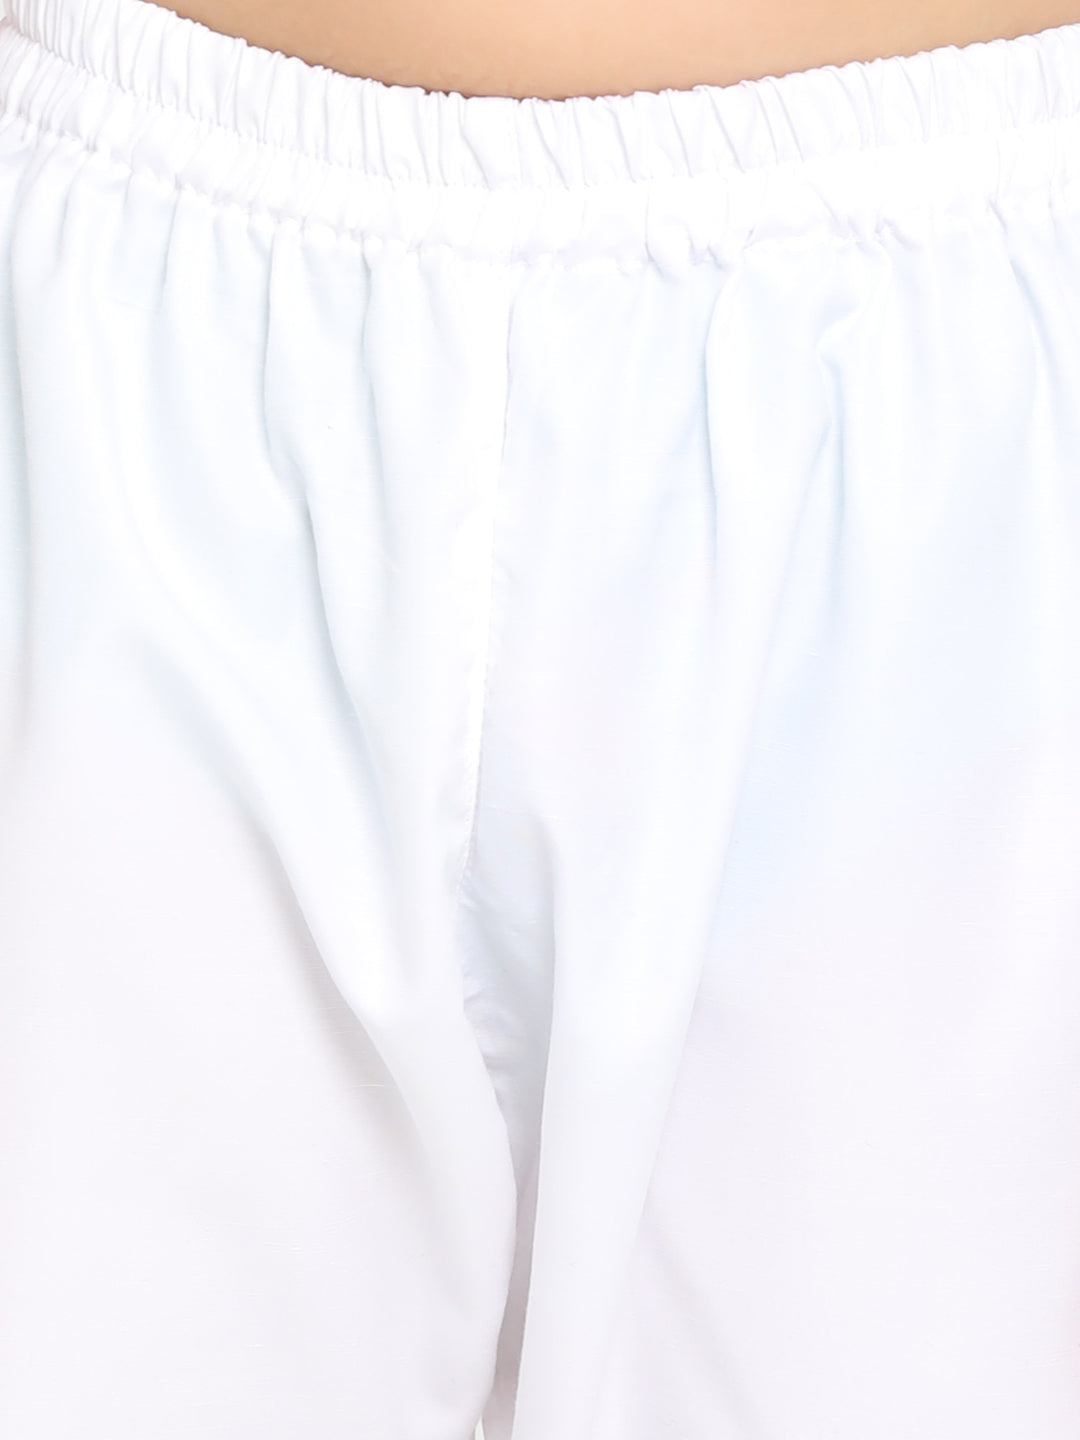 Vastramay Classic Solid Kurta In Cotton Fabric With White Pyjama And Muslim Prayer Cap For Boys - Distacart